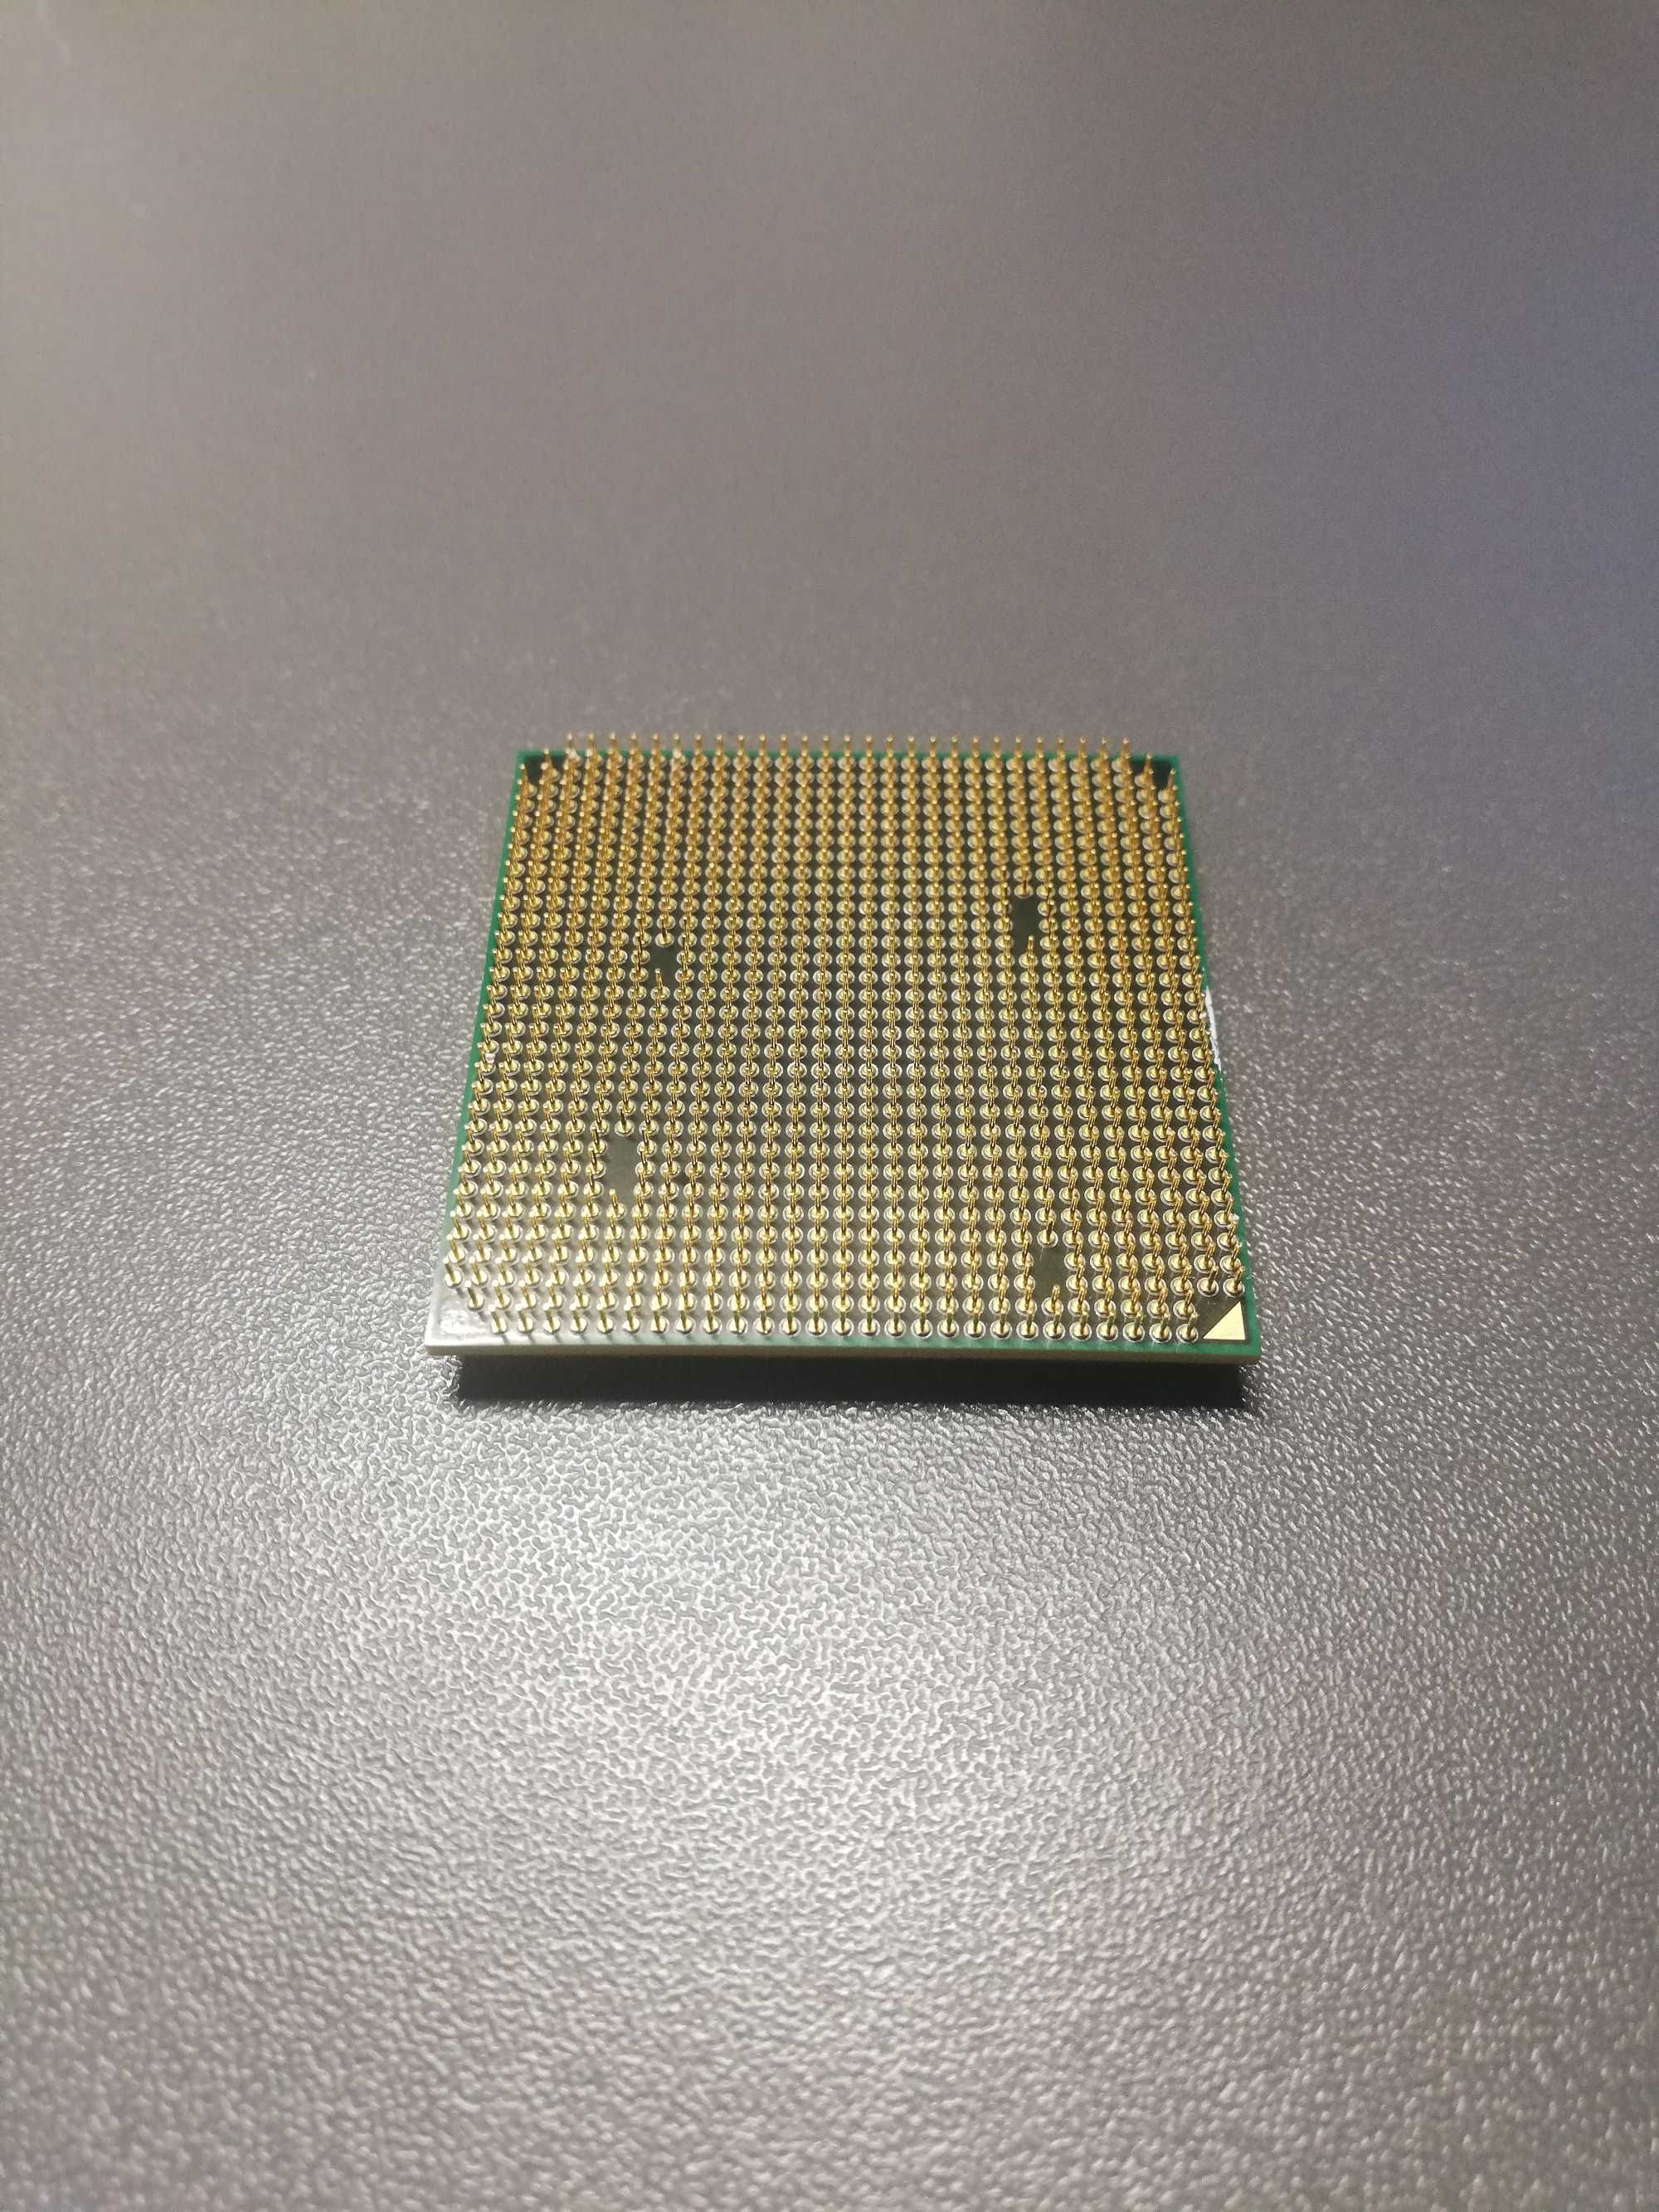 Процессор AMD Phenom II X4 965 3.4 GHz Black Edition (HDZ965FBK4DGM)